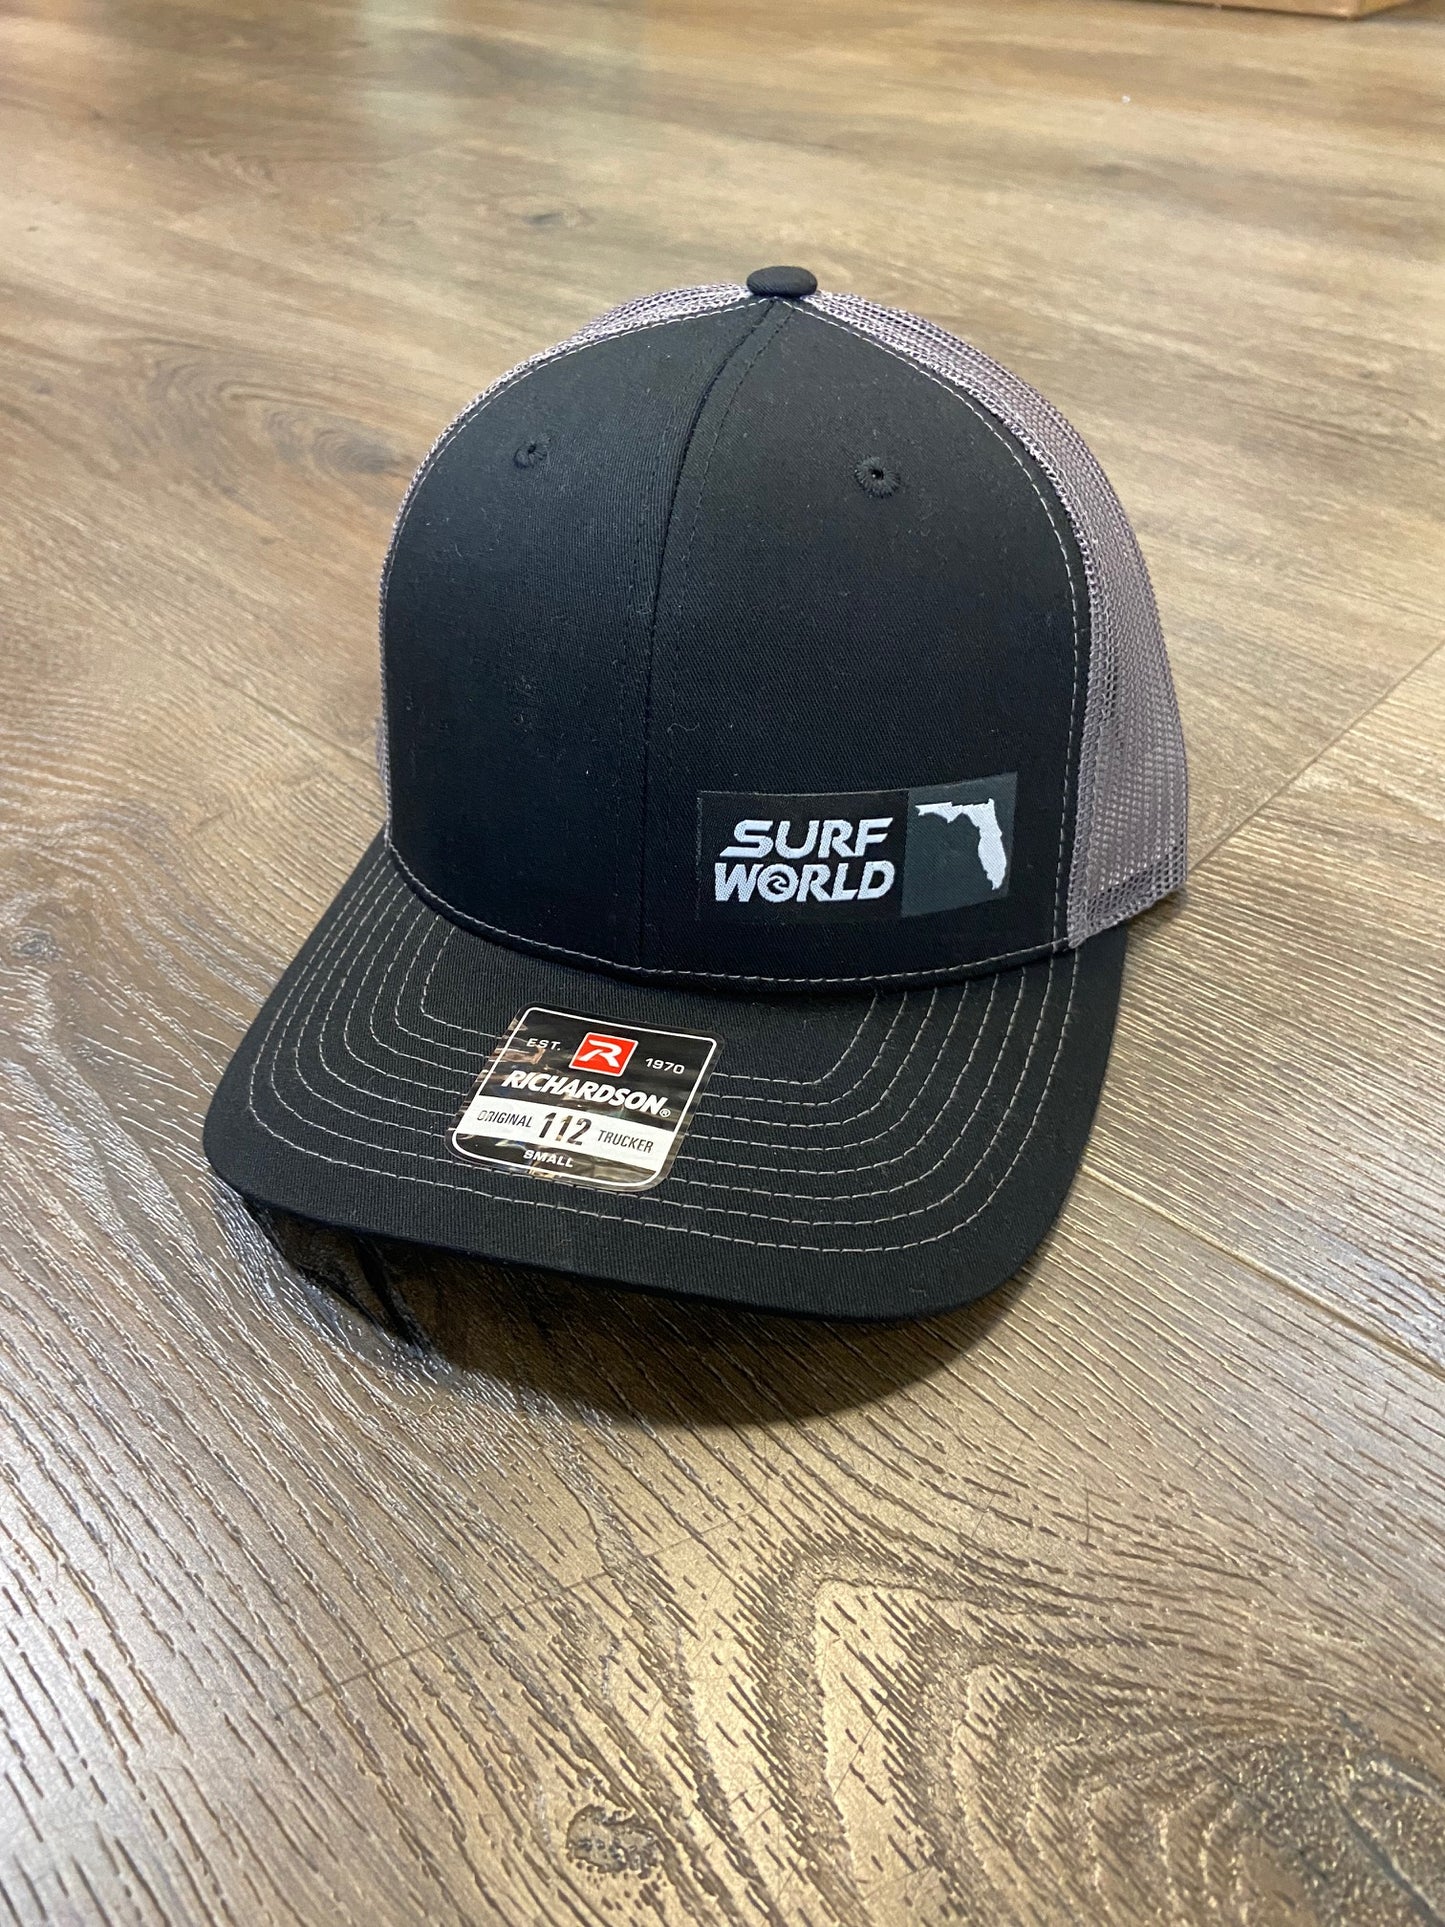 Surf World Florida Patch Trucker Hat Hats Blk Gry Side Logo